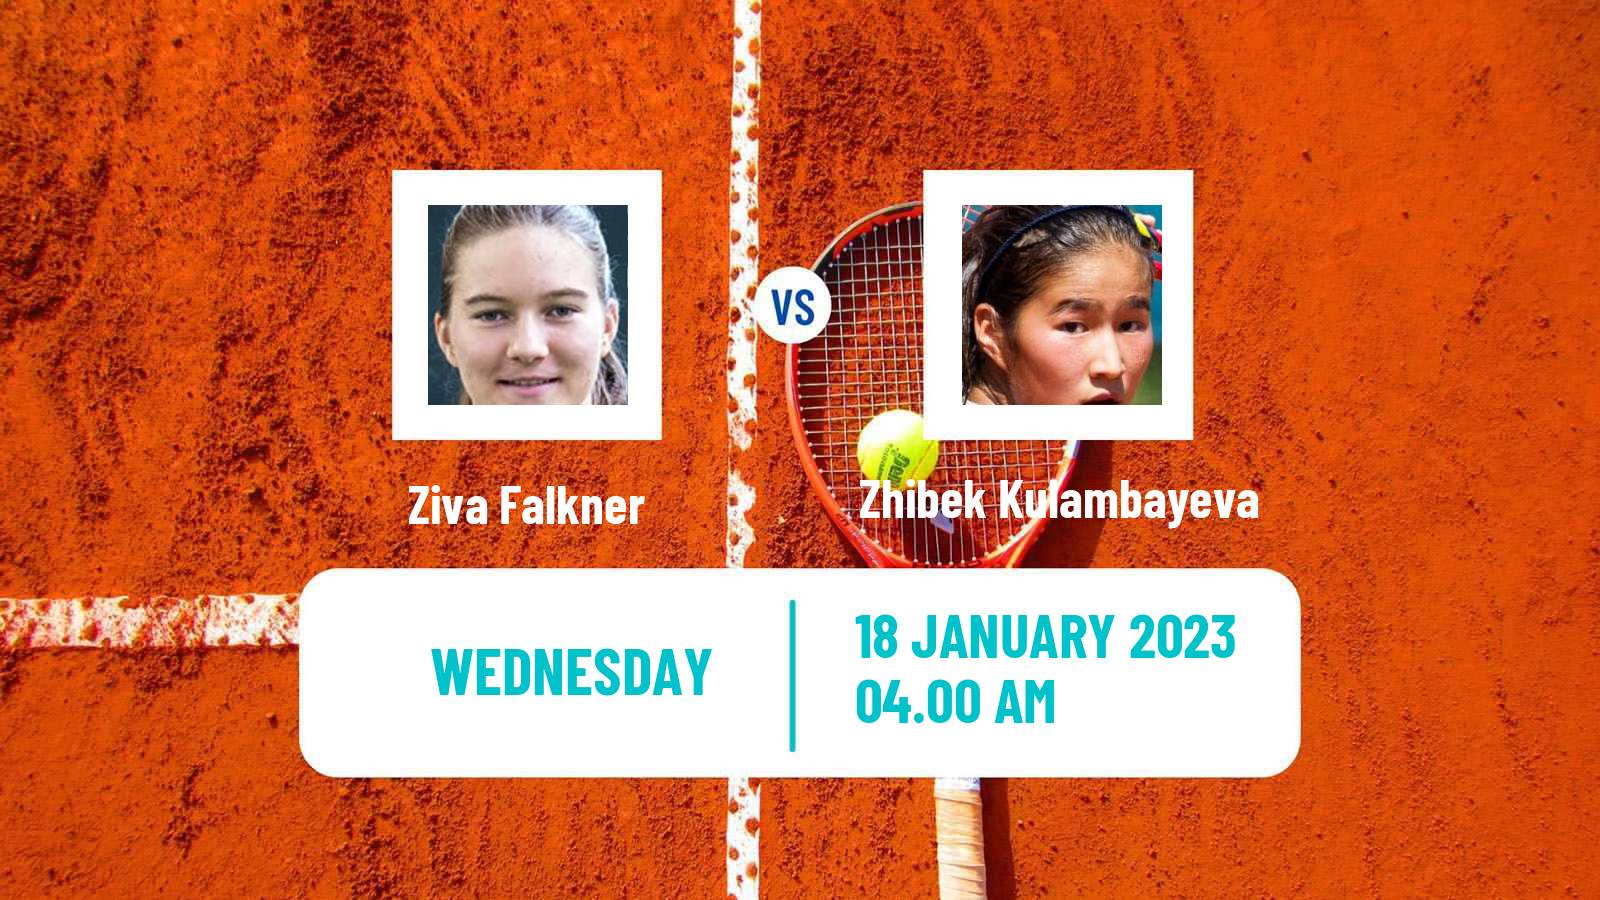 Tennis ITF Tournaments Ziva Falkner - Zhibek Kulambayeva